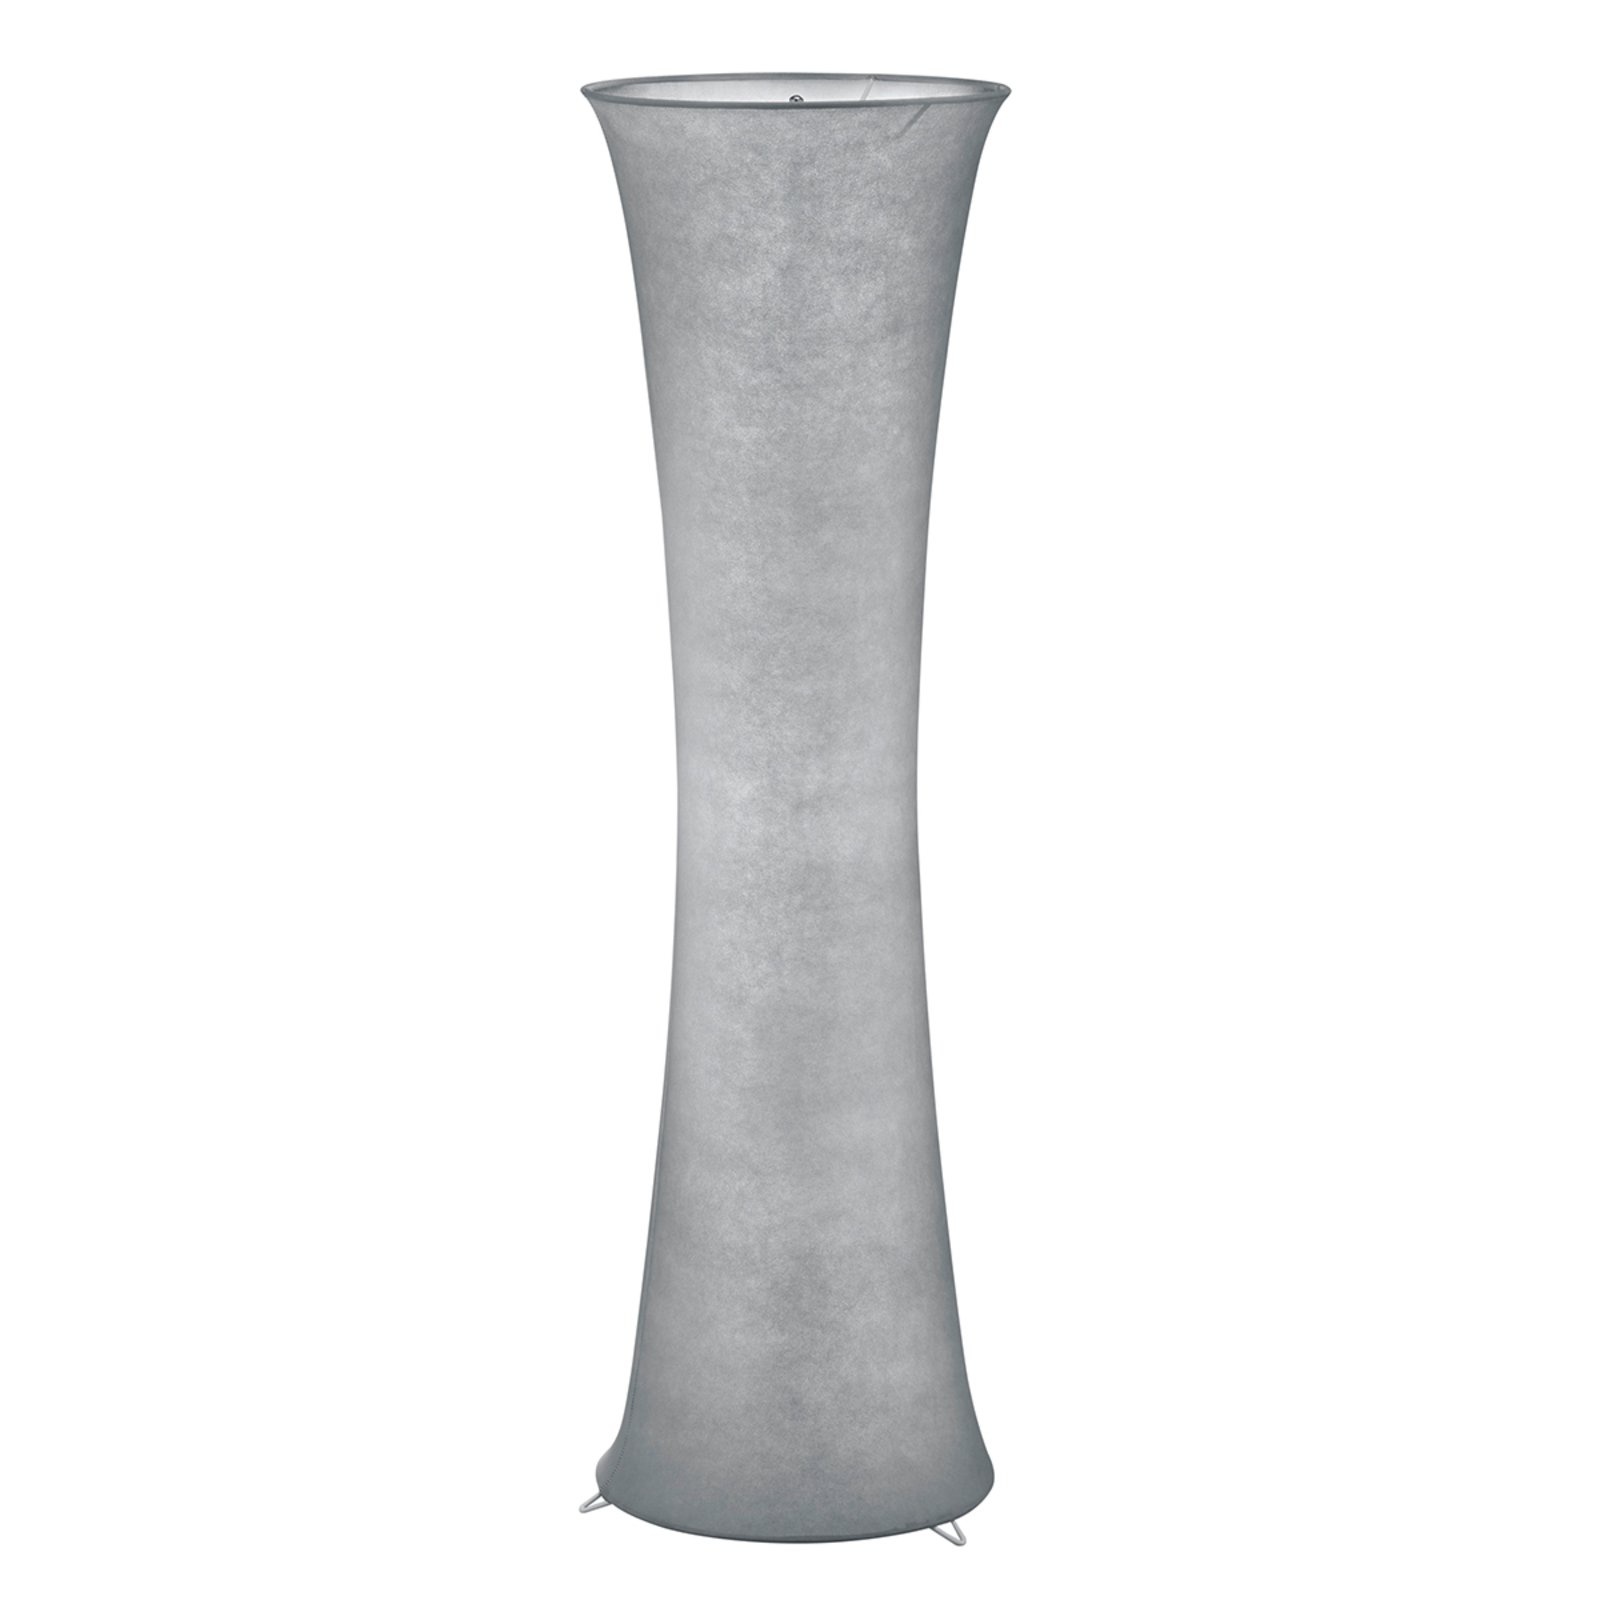 Atmosferska tekstilna podna lampa Gravis u sivoj boji